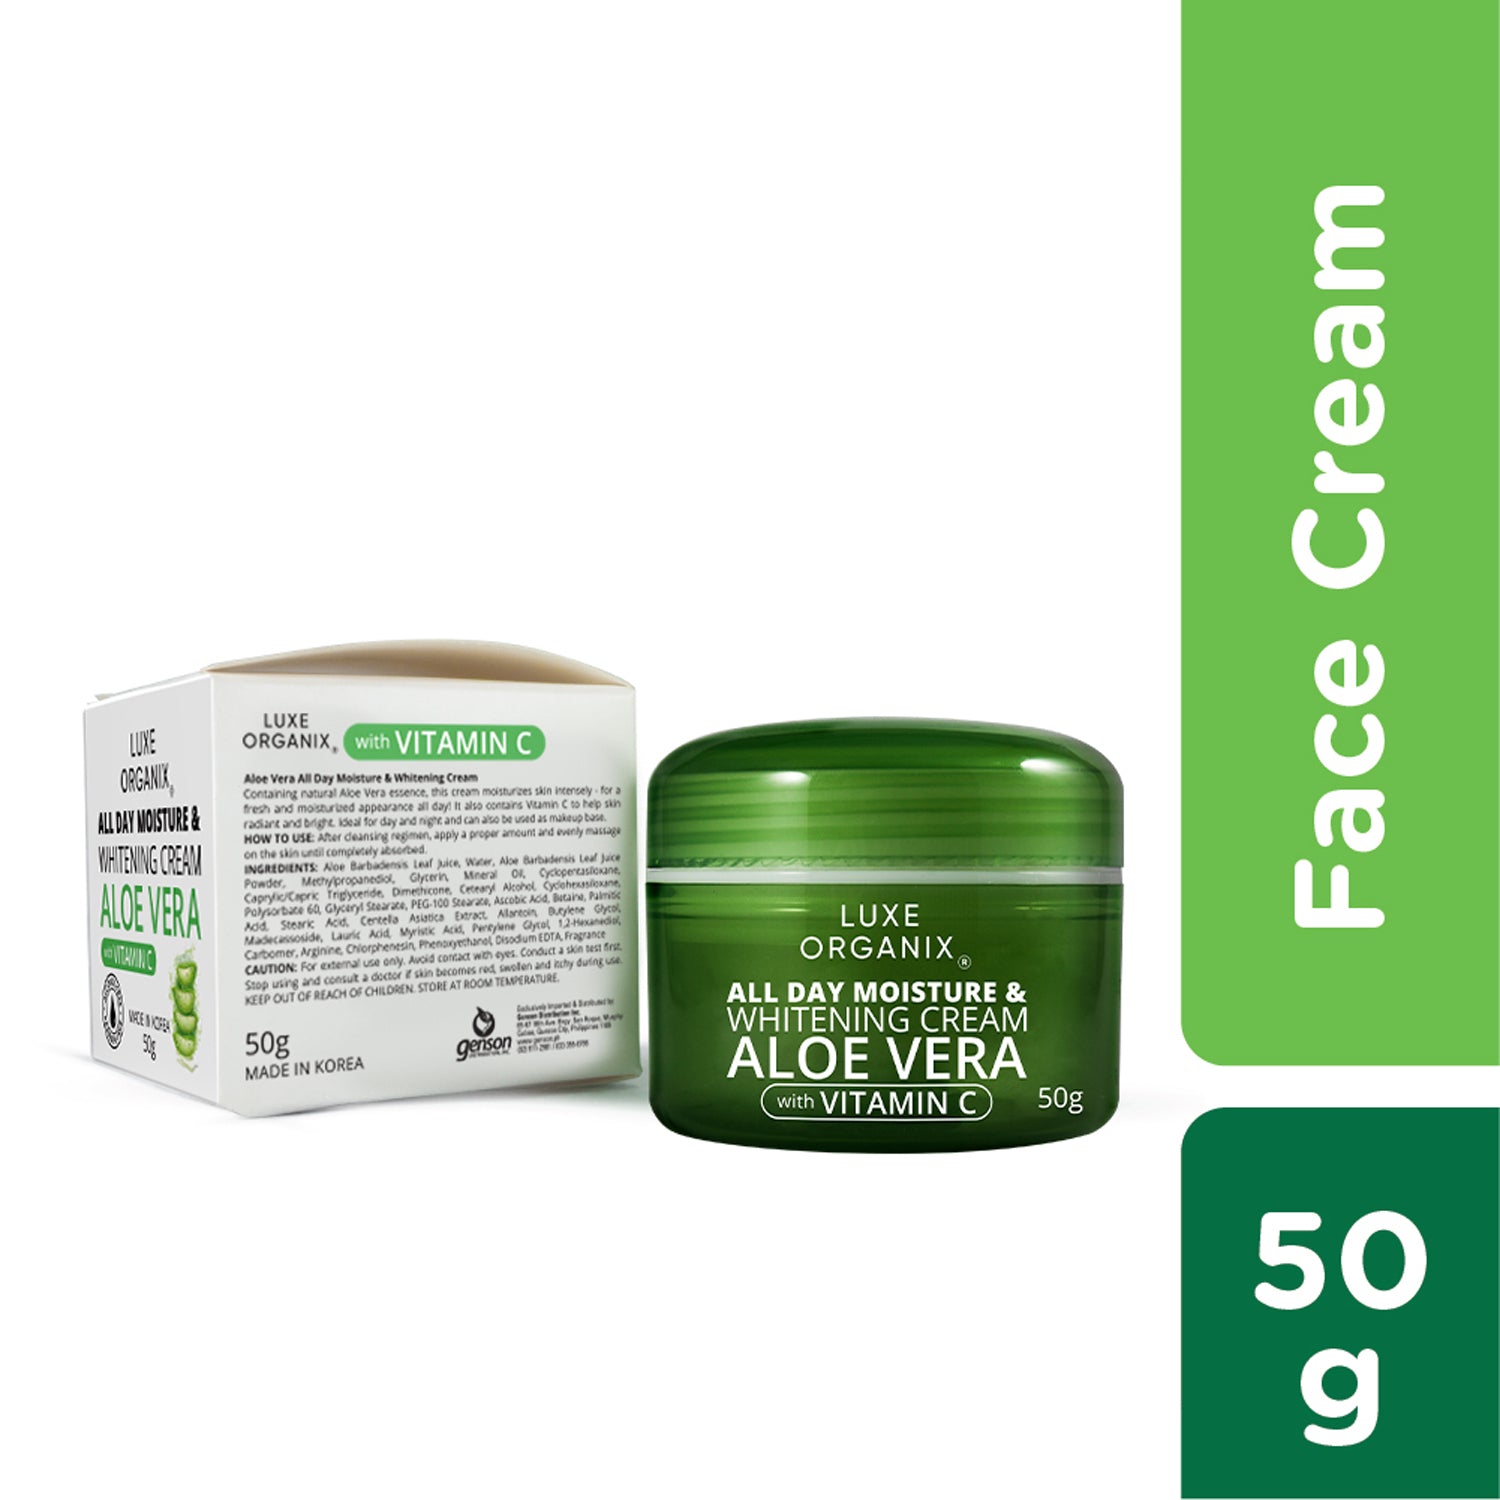 Luxe Organix Aloe Vera All Day Moisture and Whitening Cream with Vitamin C 50g